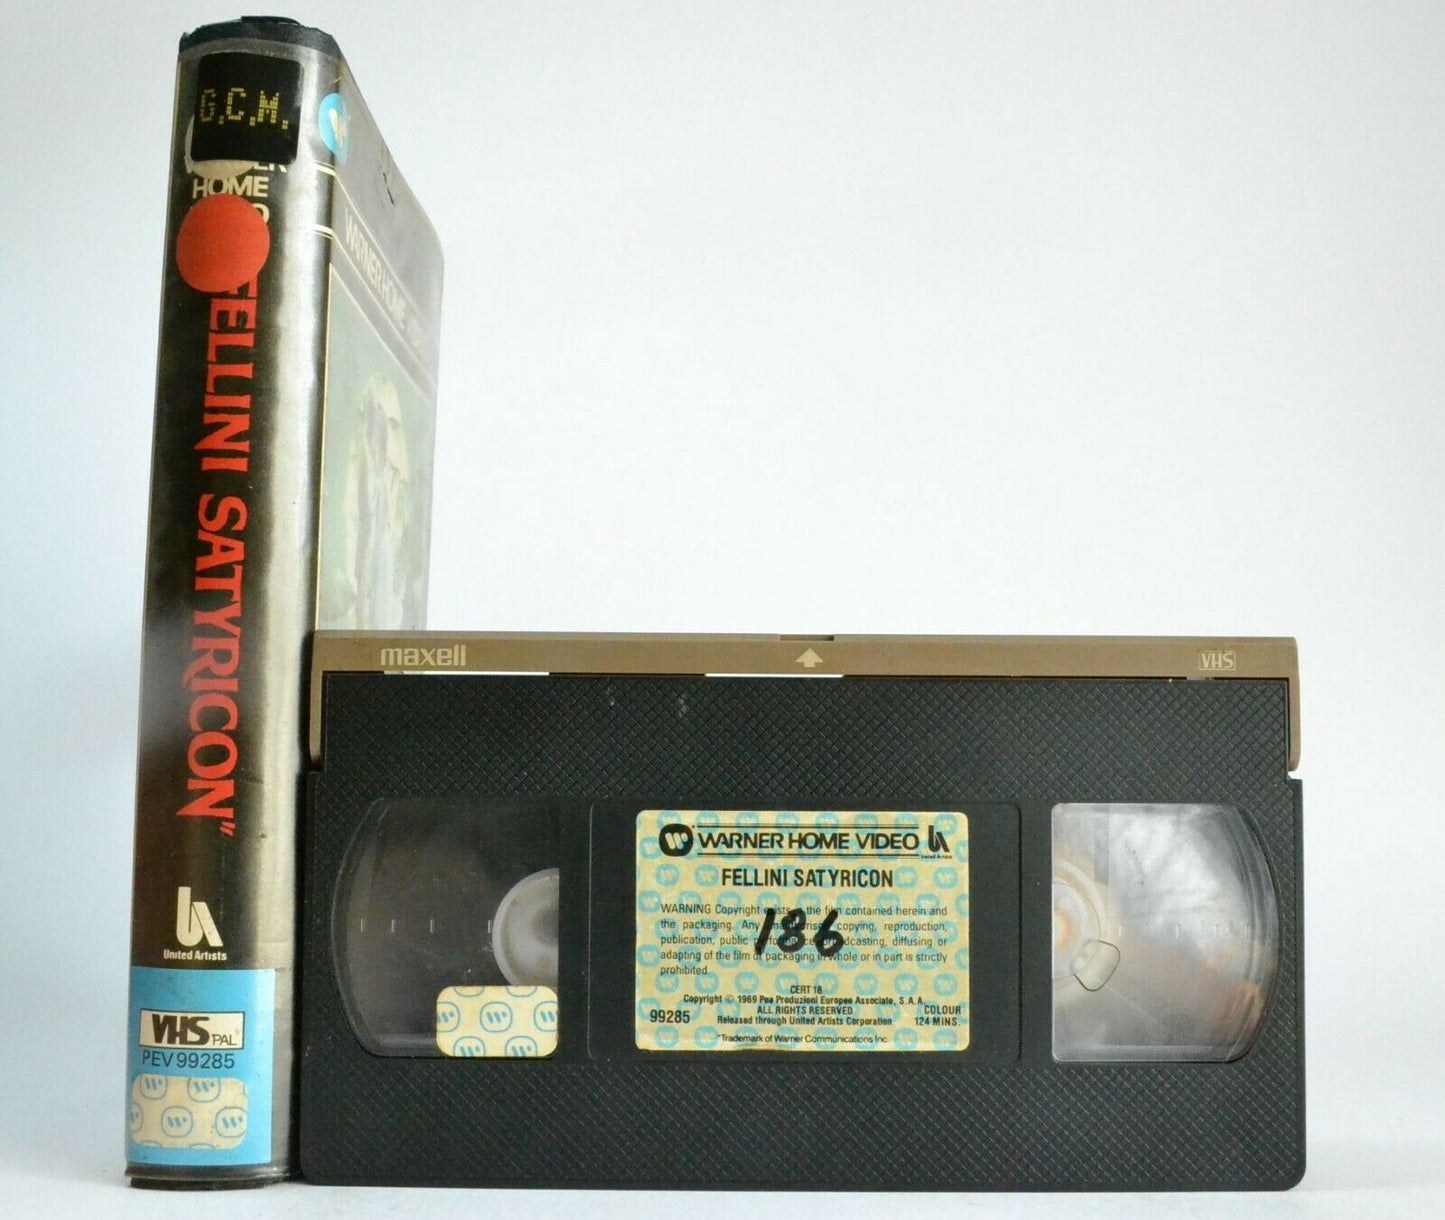 Fellini Satyricon: (1969) Italian Fantasy Drama - Warner Pre-Cert Edition - VHS-